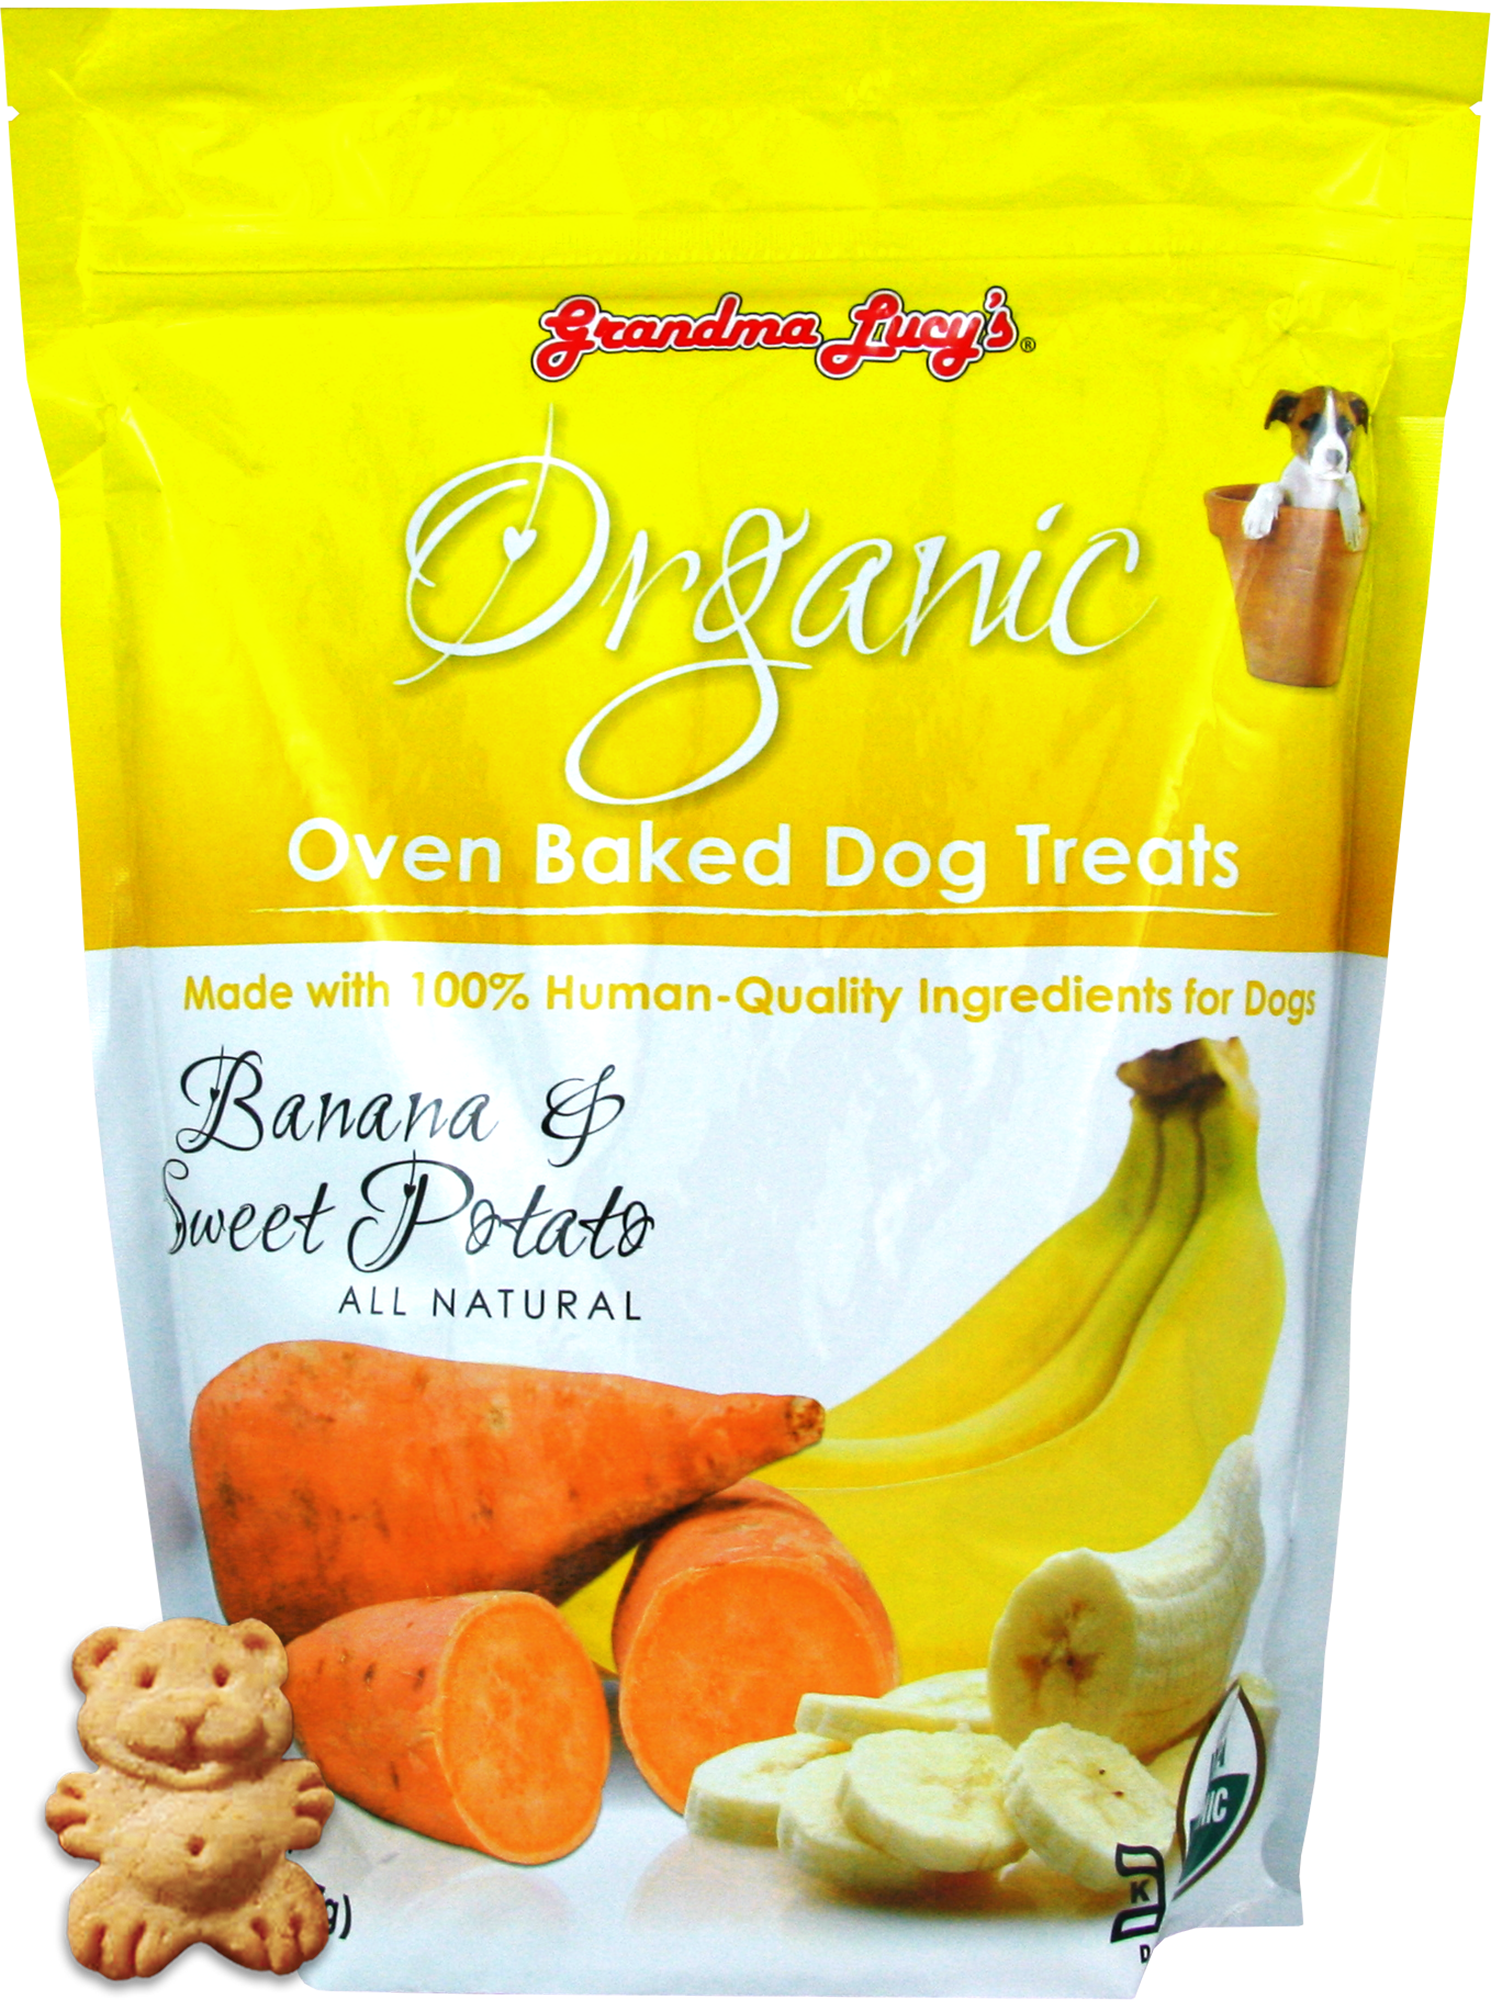 Grandma Lucy's Organic banana and sweet potato